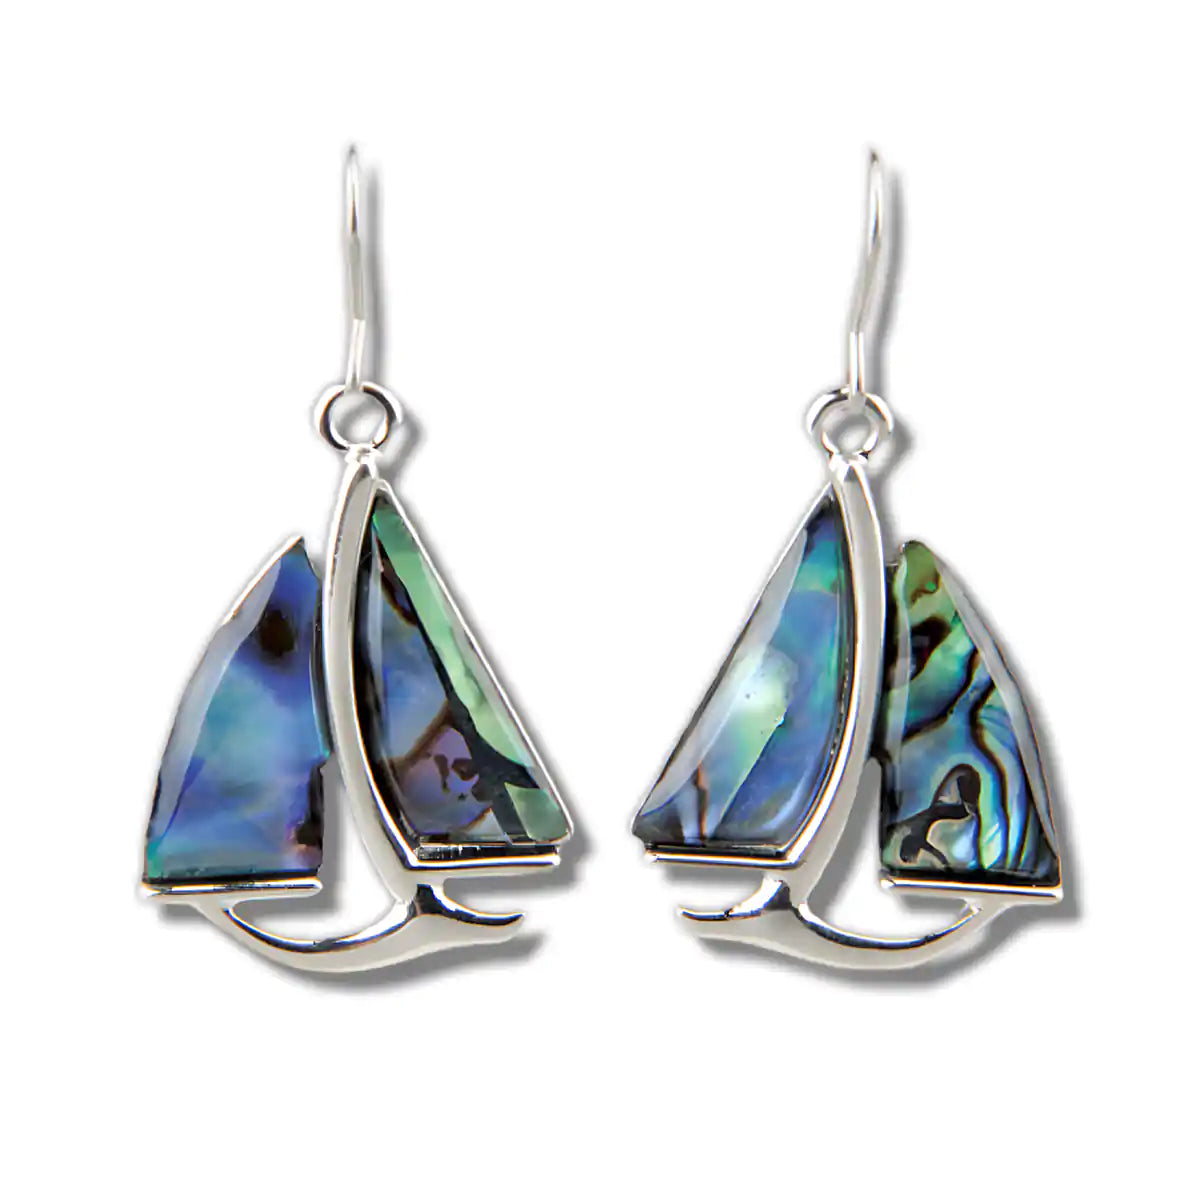 Glacier pearle sail boat earrings